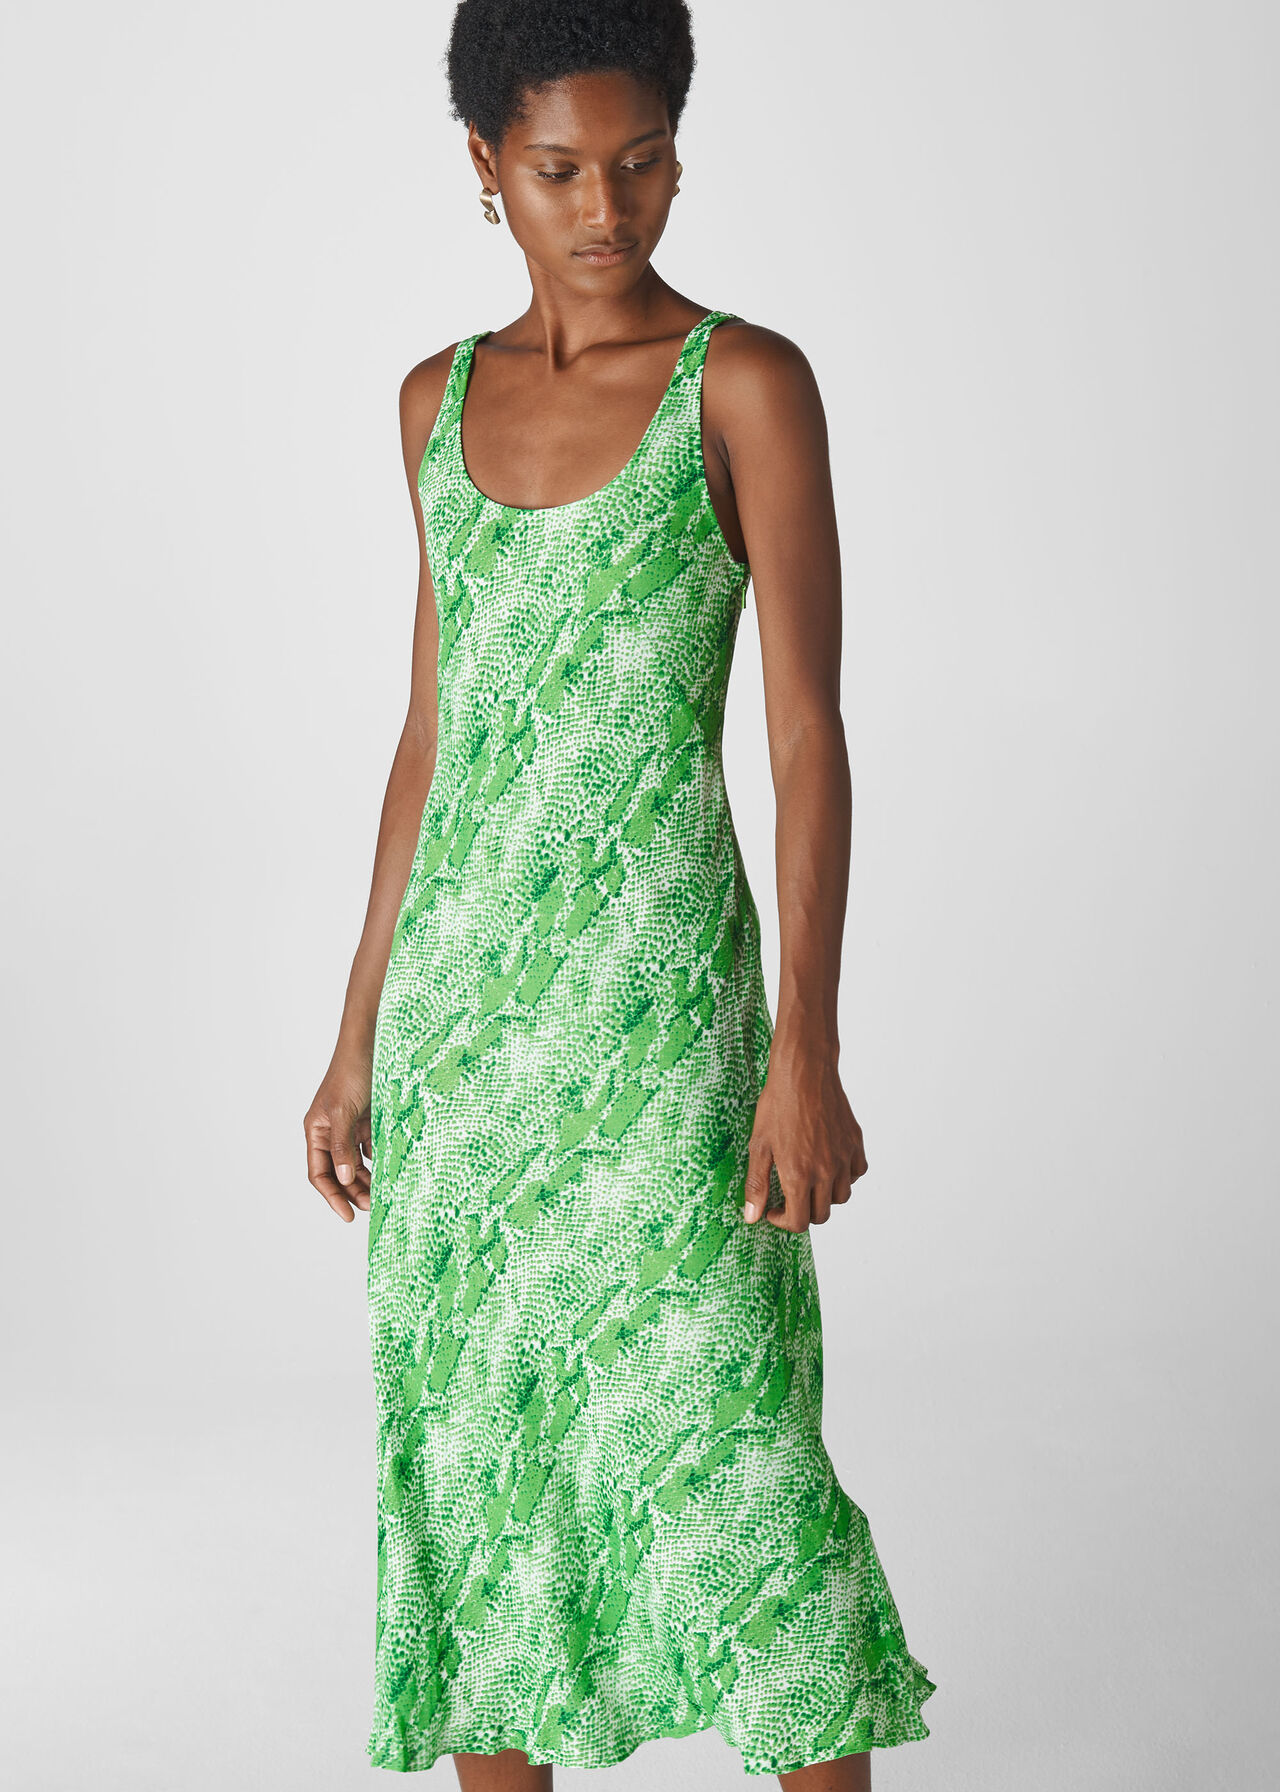 Python Print Dress |